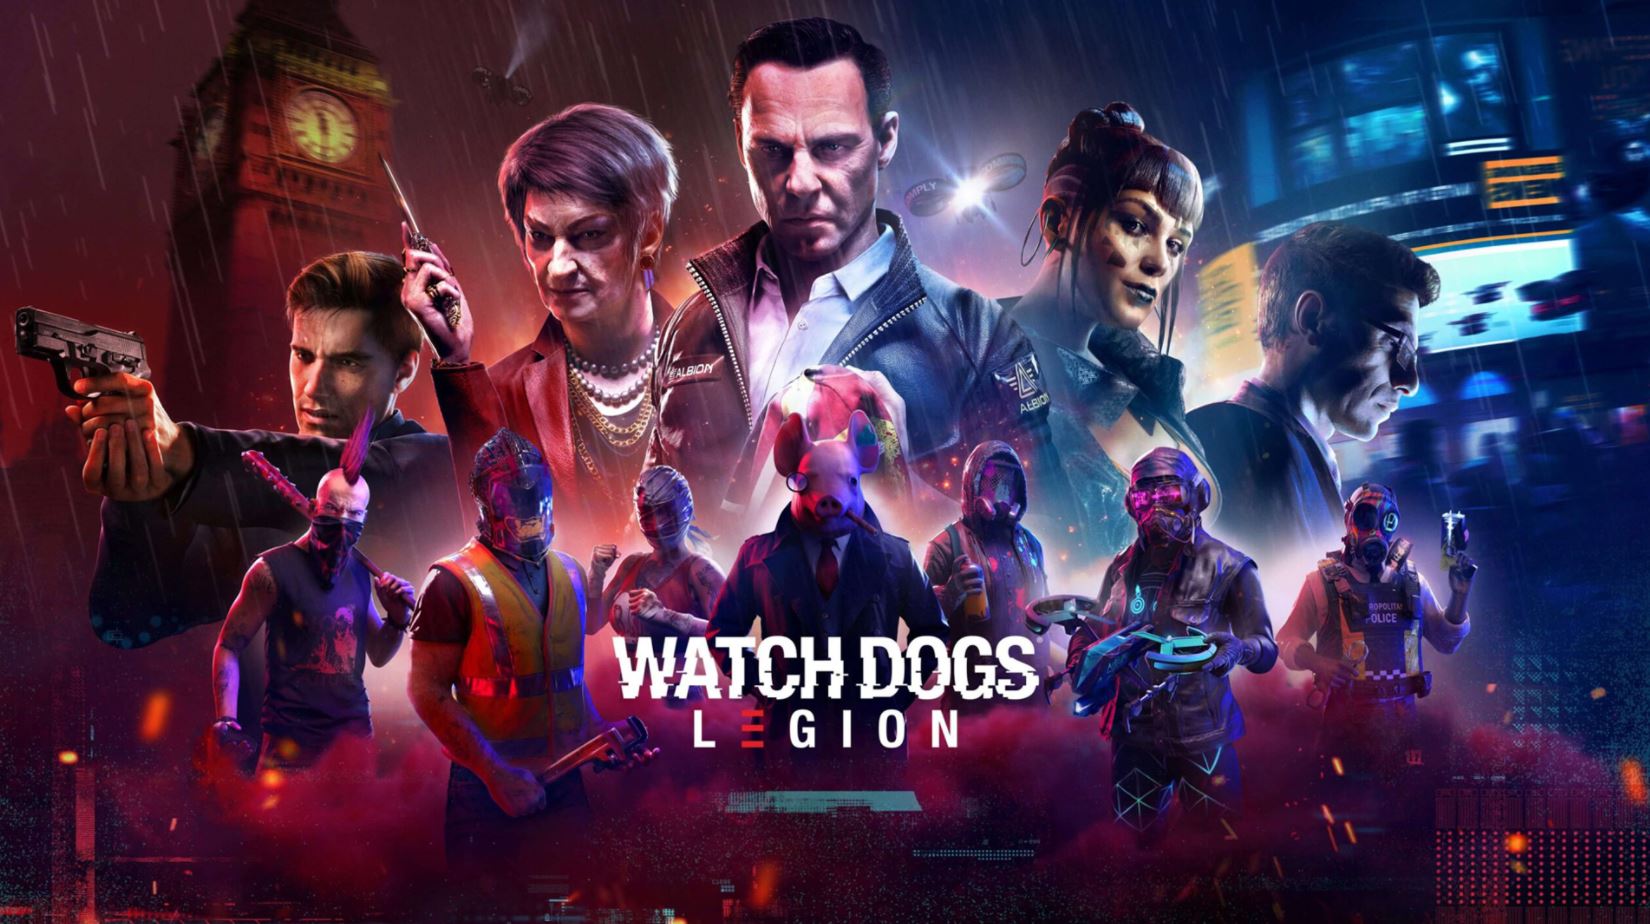 Watch Dogs: legion - Bloodline review